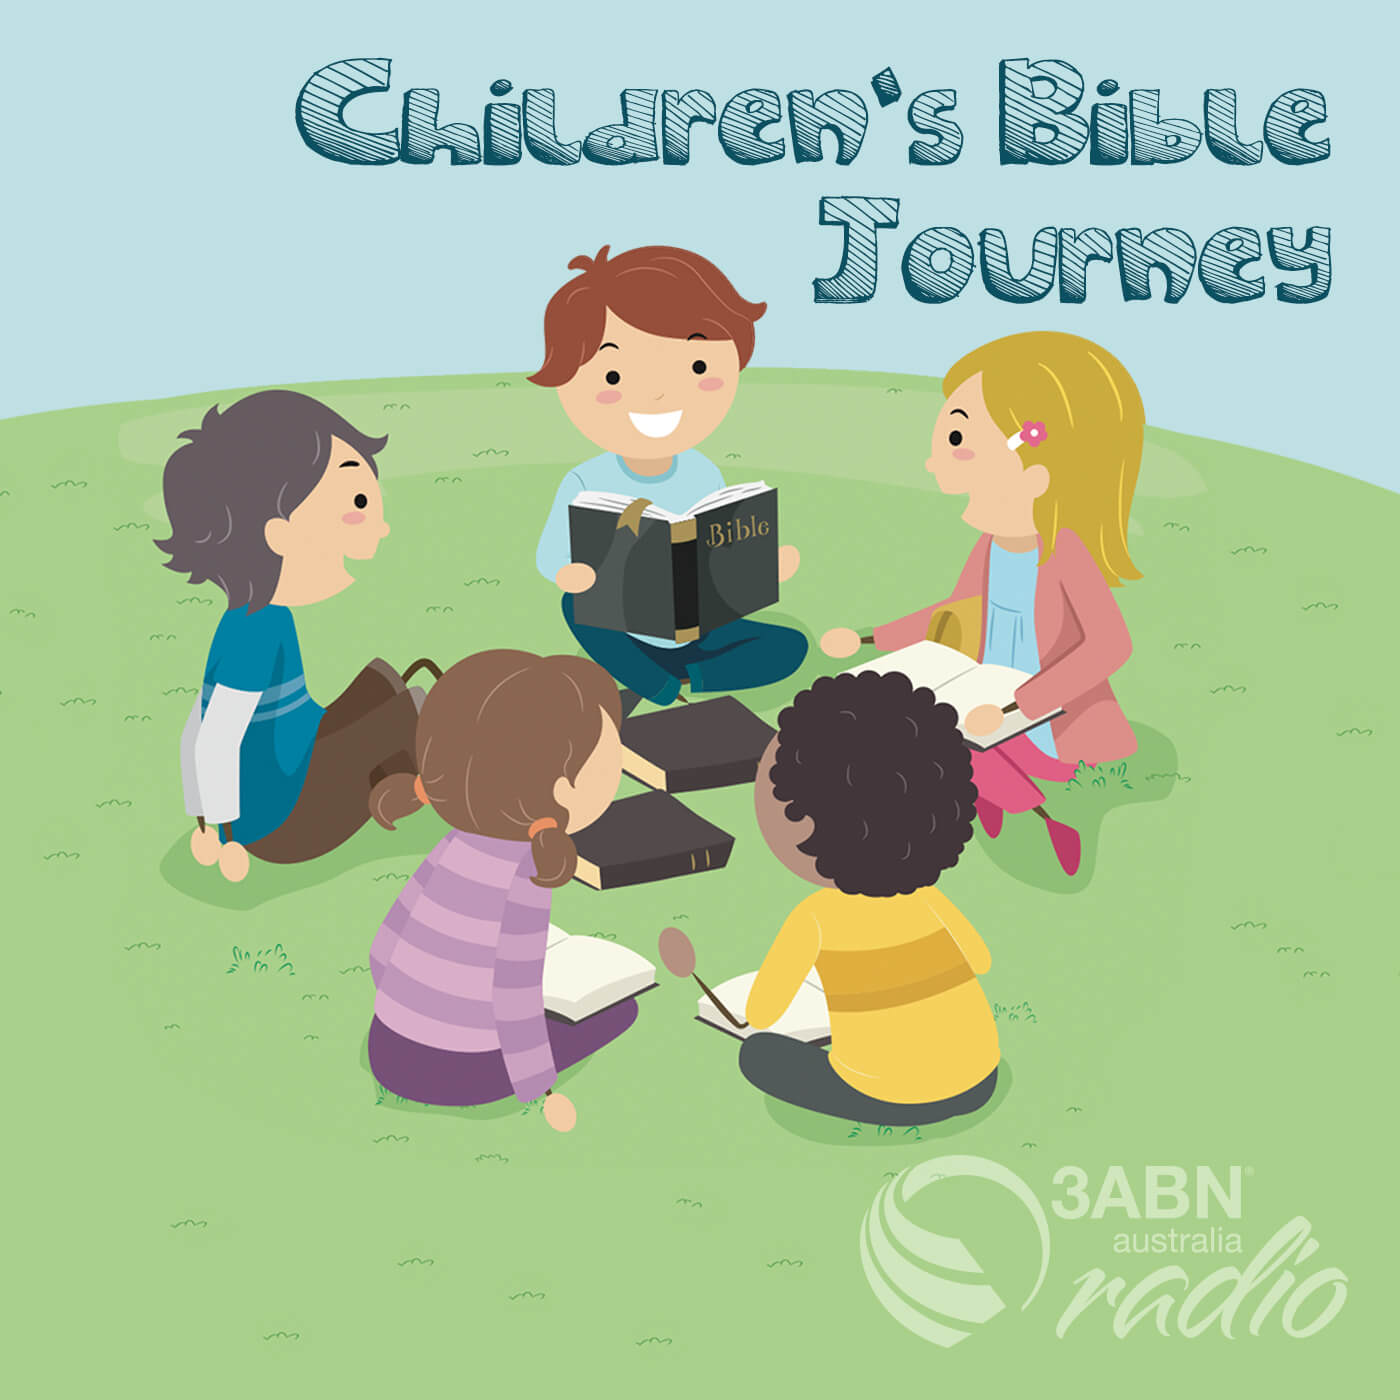 Children's Bible Journey - 2151